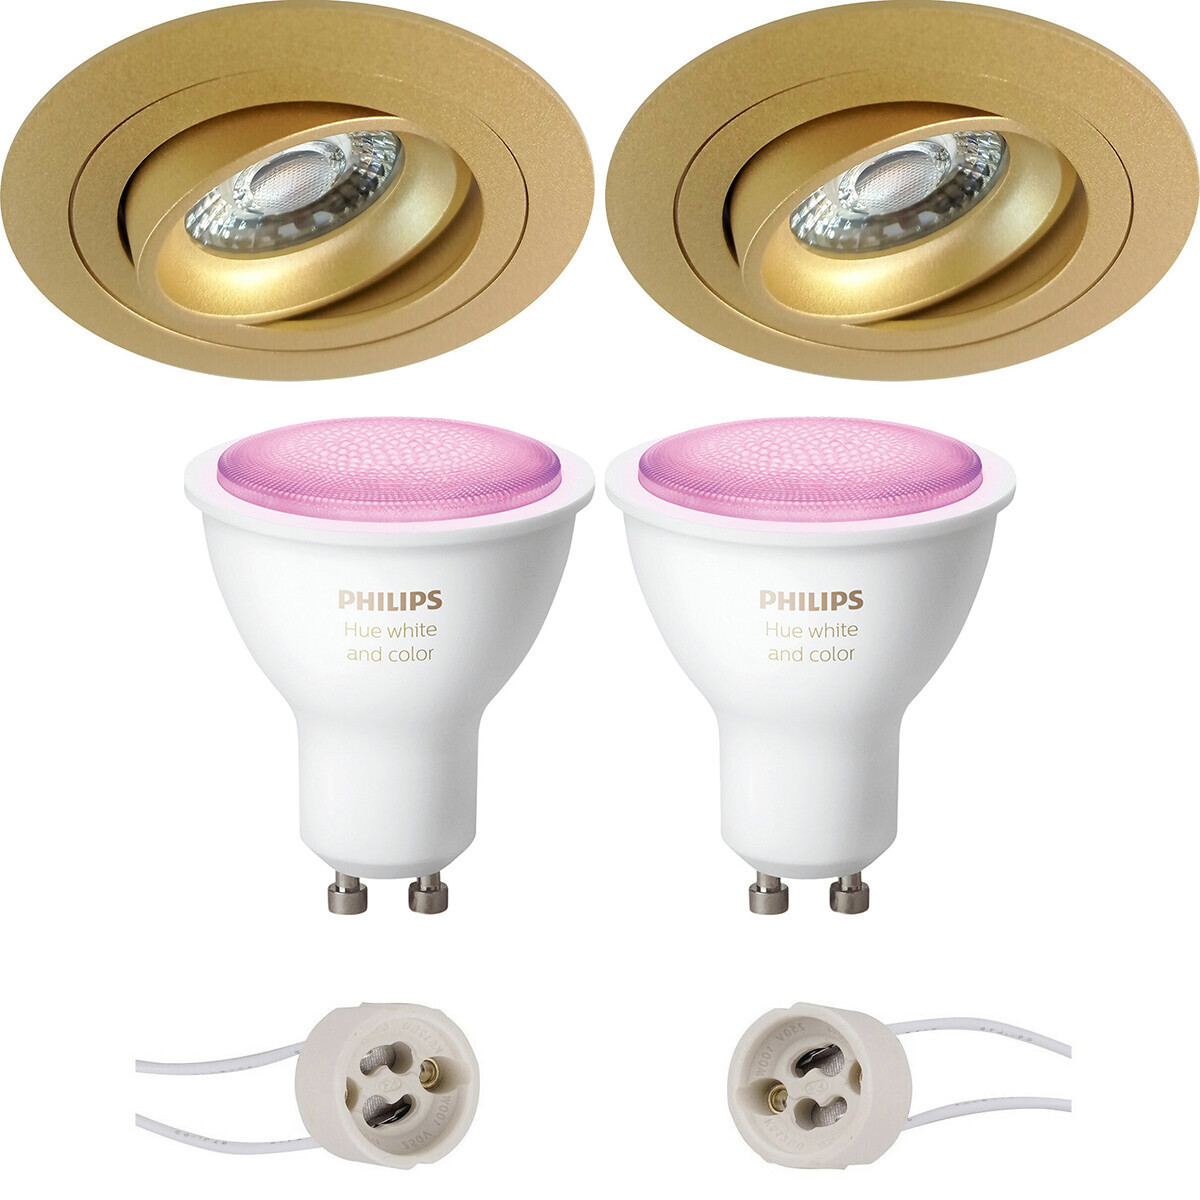 Pragmi Alpin Pro - Inbouw Rond - Mat Goud - Kantelbaar - Ø92mm - Philips Hue - LED Spot Set GU10 - White and Color Ambiance - Bluetooth